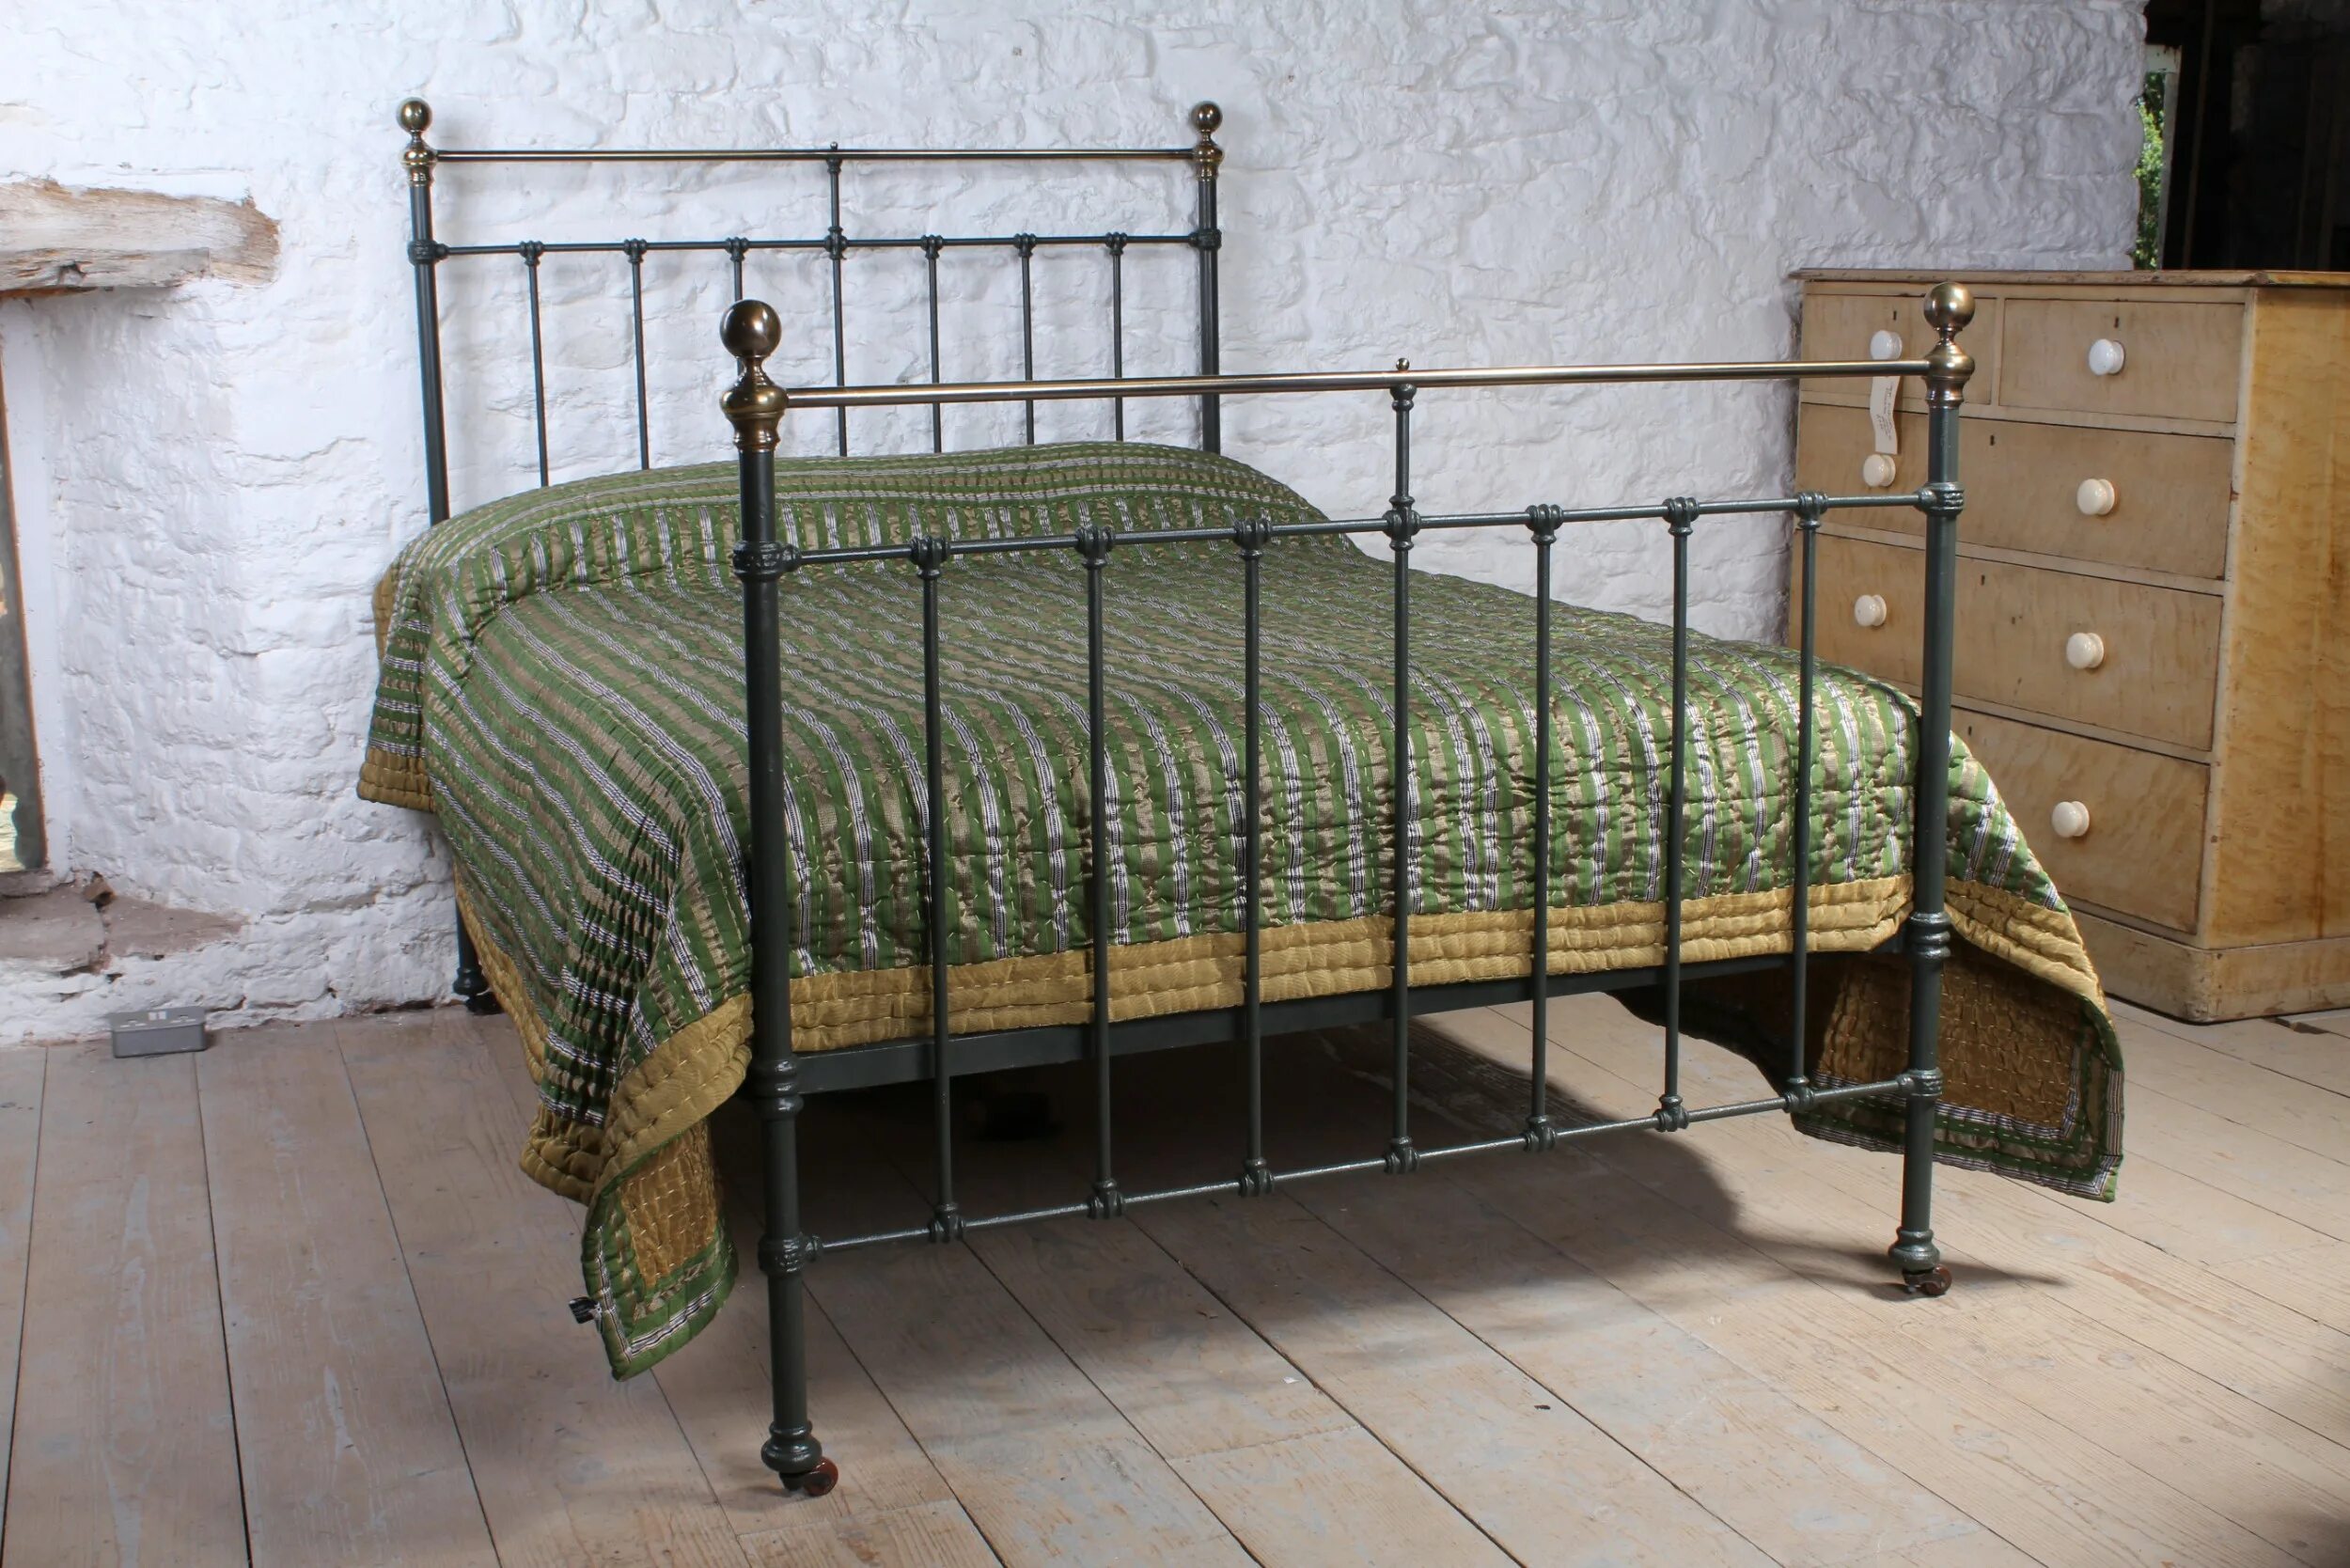 Куплю старые кровати. Classic Victorian King Size Brass and Iron Bed 238403 Sellin кровать. Кровать под старину металлическая. Кровать железная под старину. Старинная металлическая кровать в интерьере.